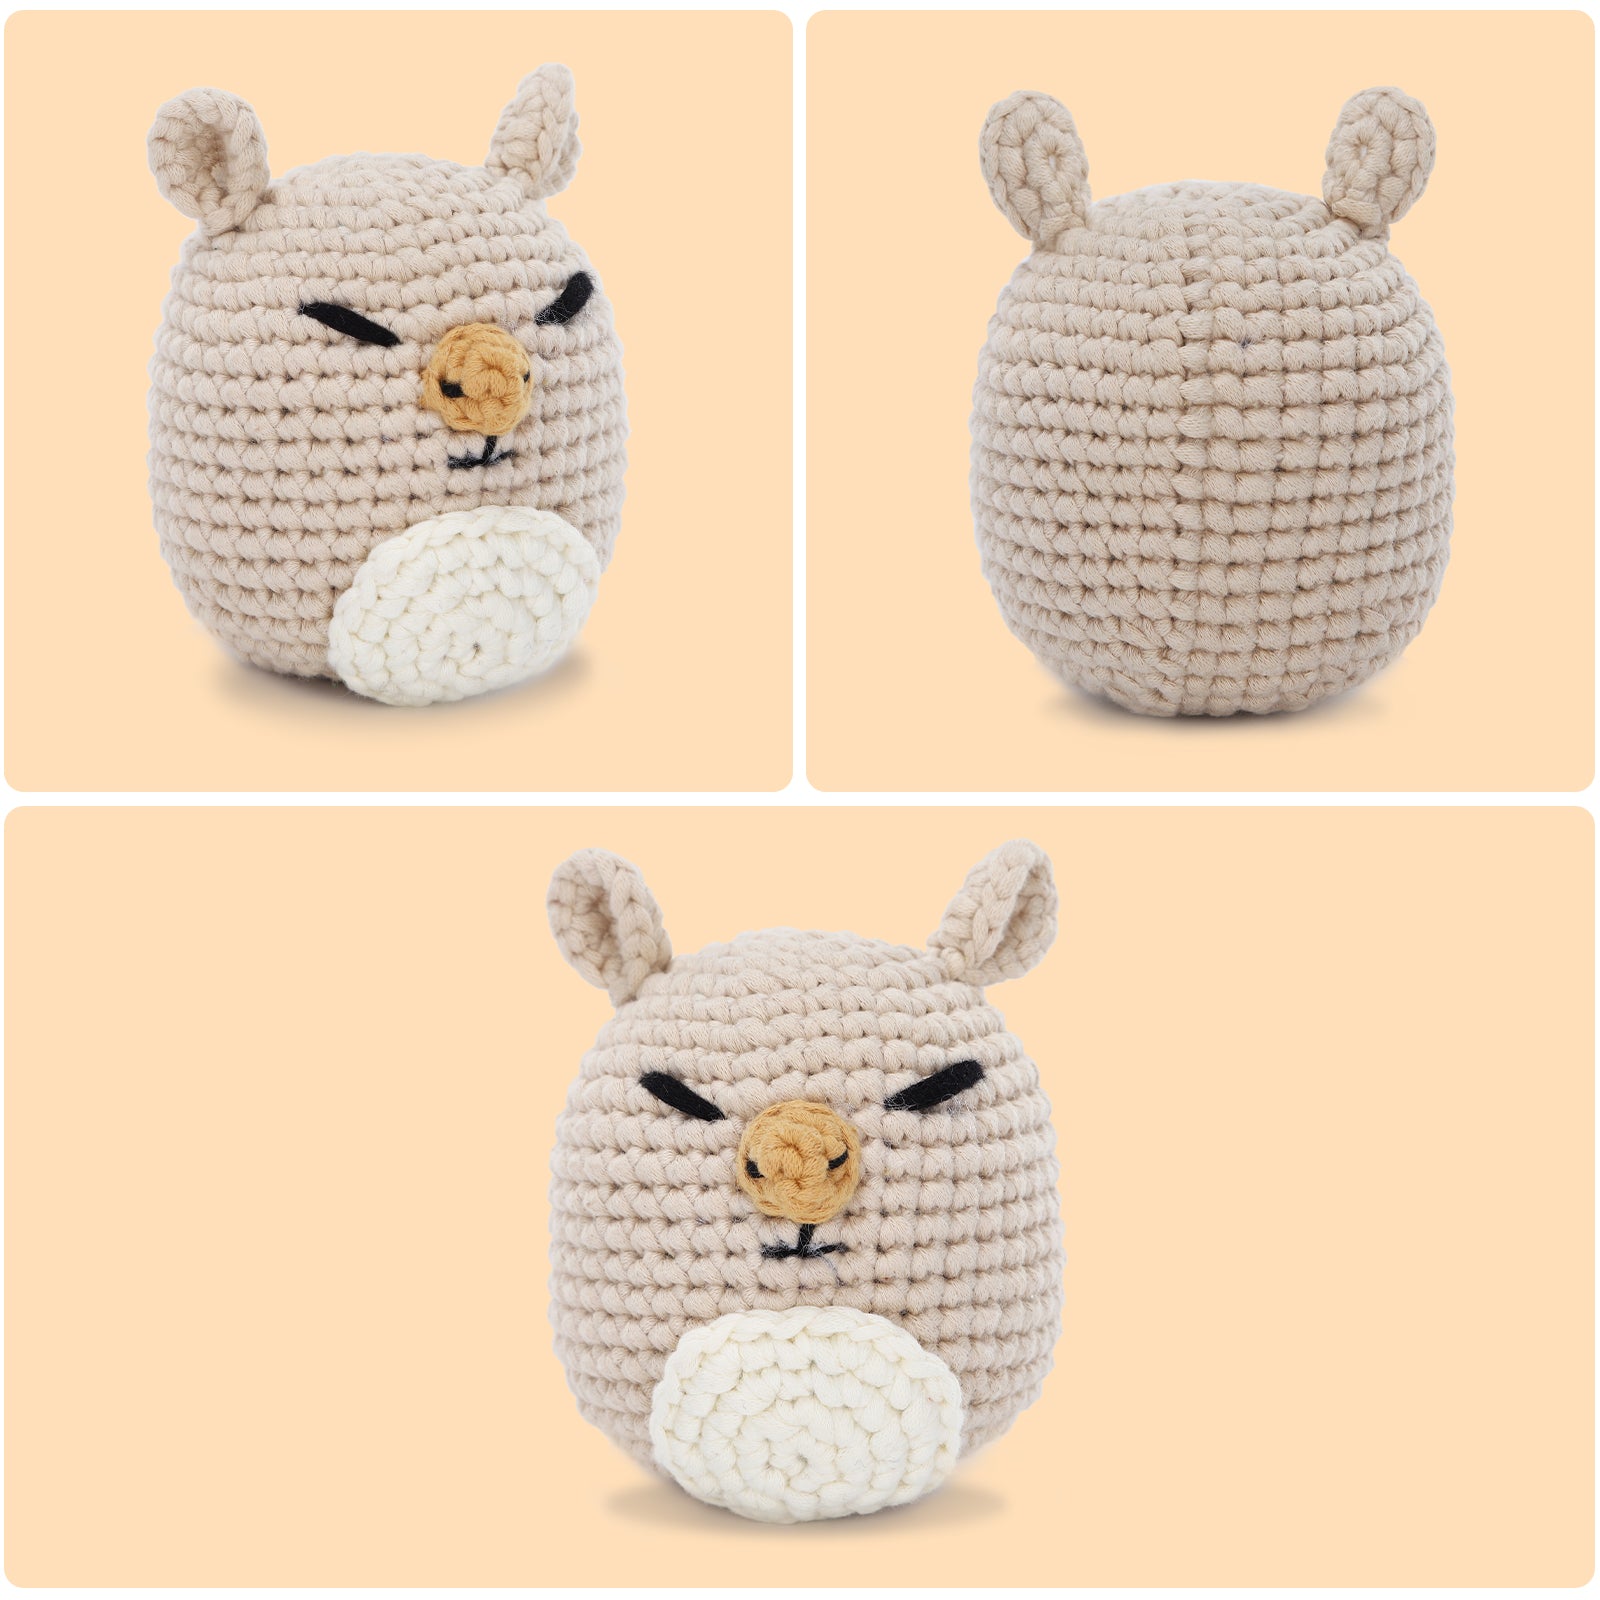  XSEINO Crochet Kit with Step-by-Step Video Tutorials，Premium  Bundle Includes 12 Roll x50Yard Acrylic Yarn Balls, 12 Crochet Hooks,  Crochet Bag and All Accessories Kit, Crochet Kit for Beginners